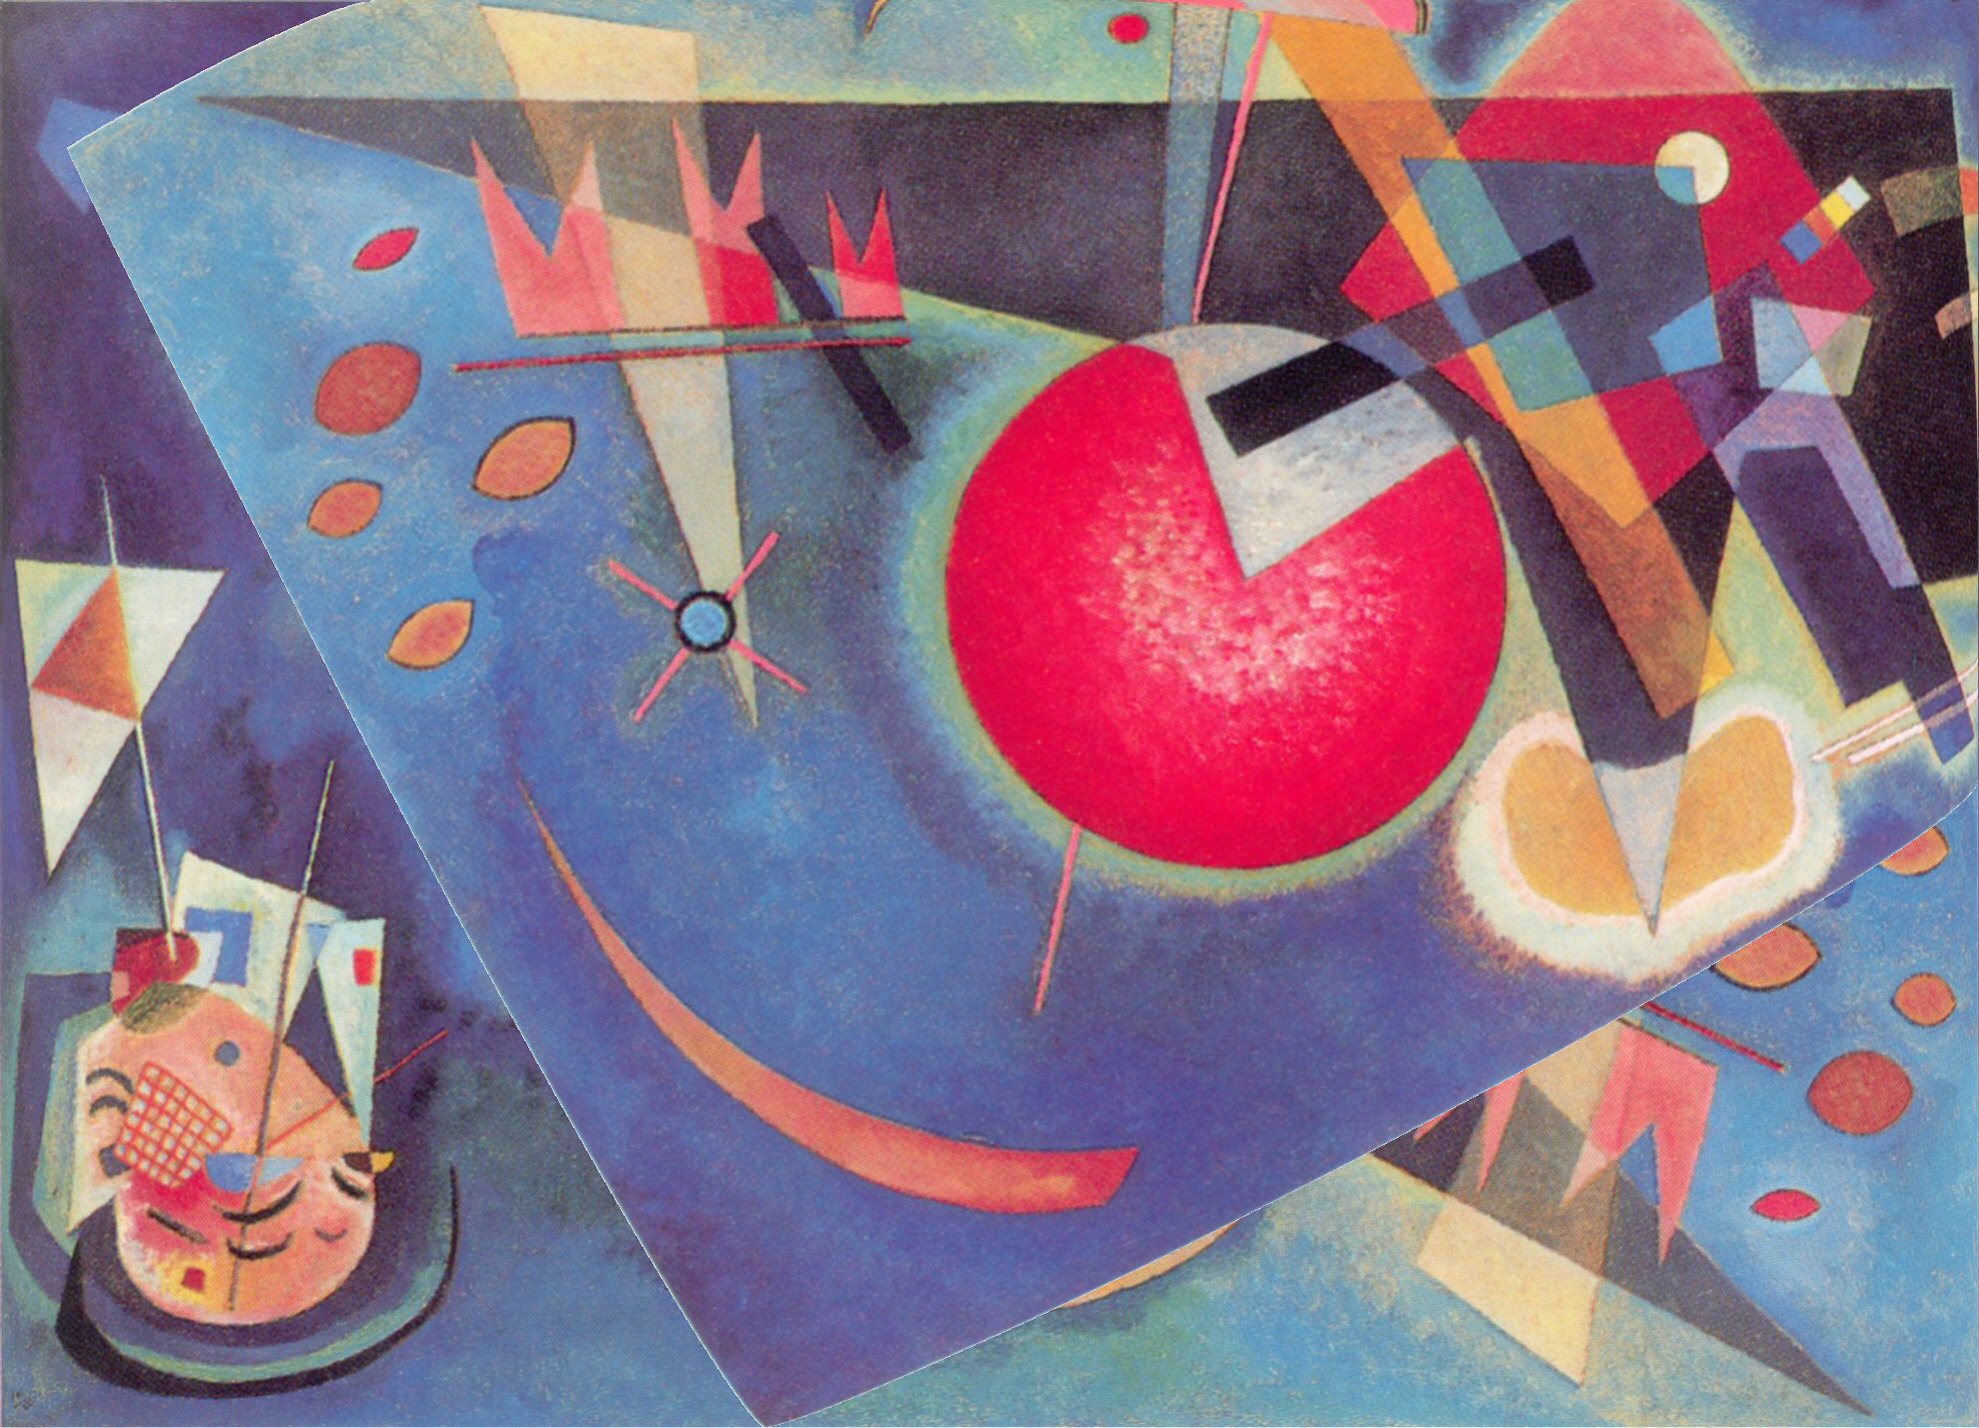 Blue, 1925 - Wassily Kandinsky - WikiArt.org